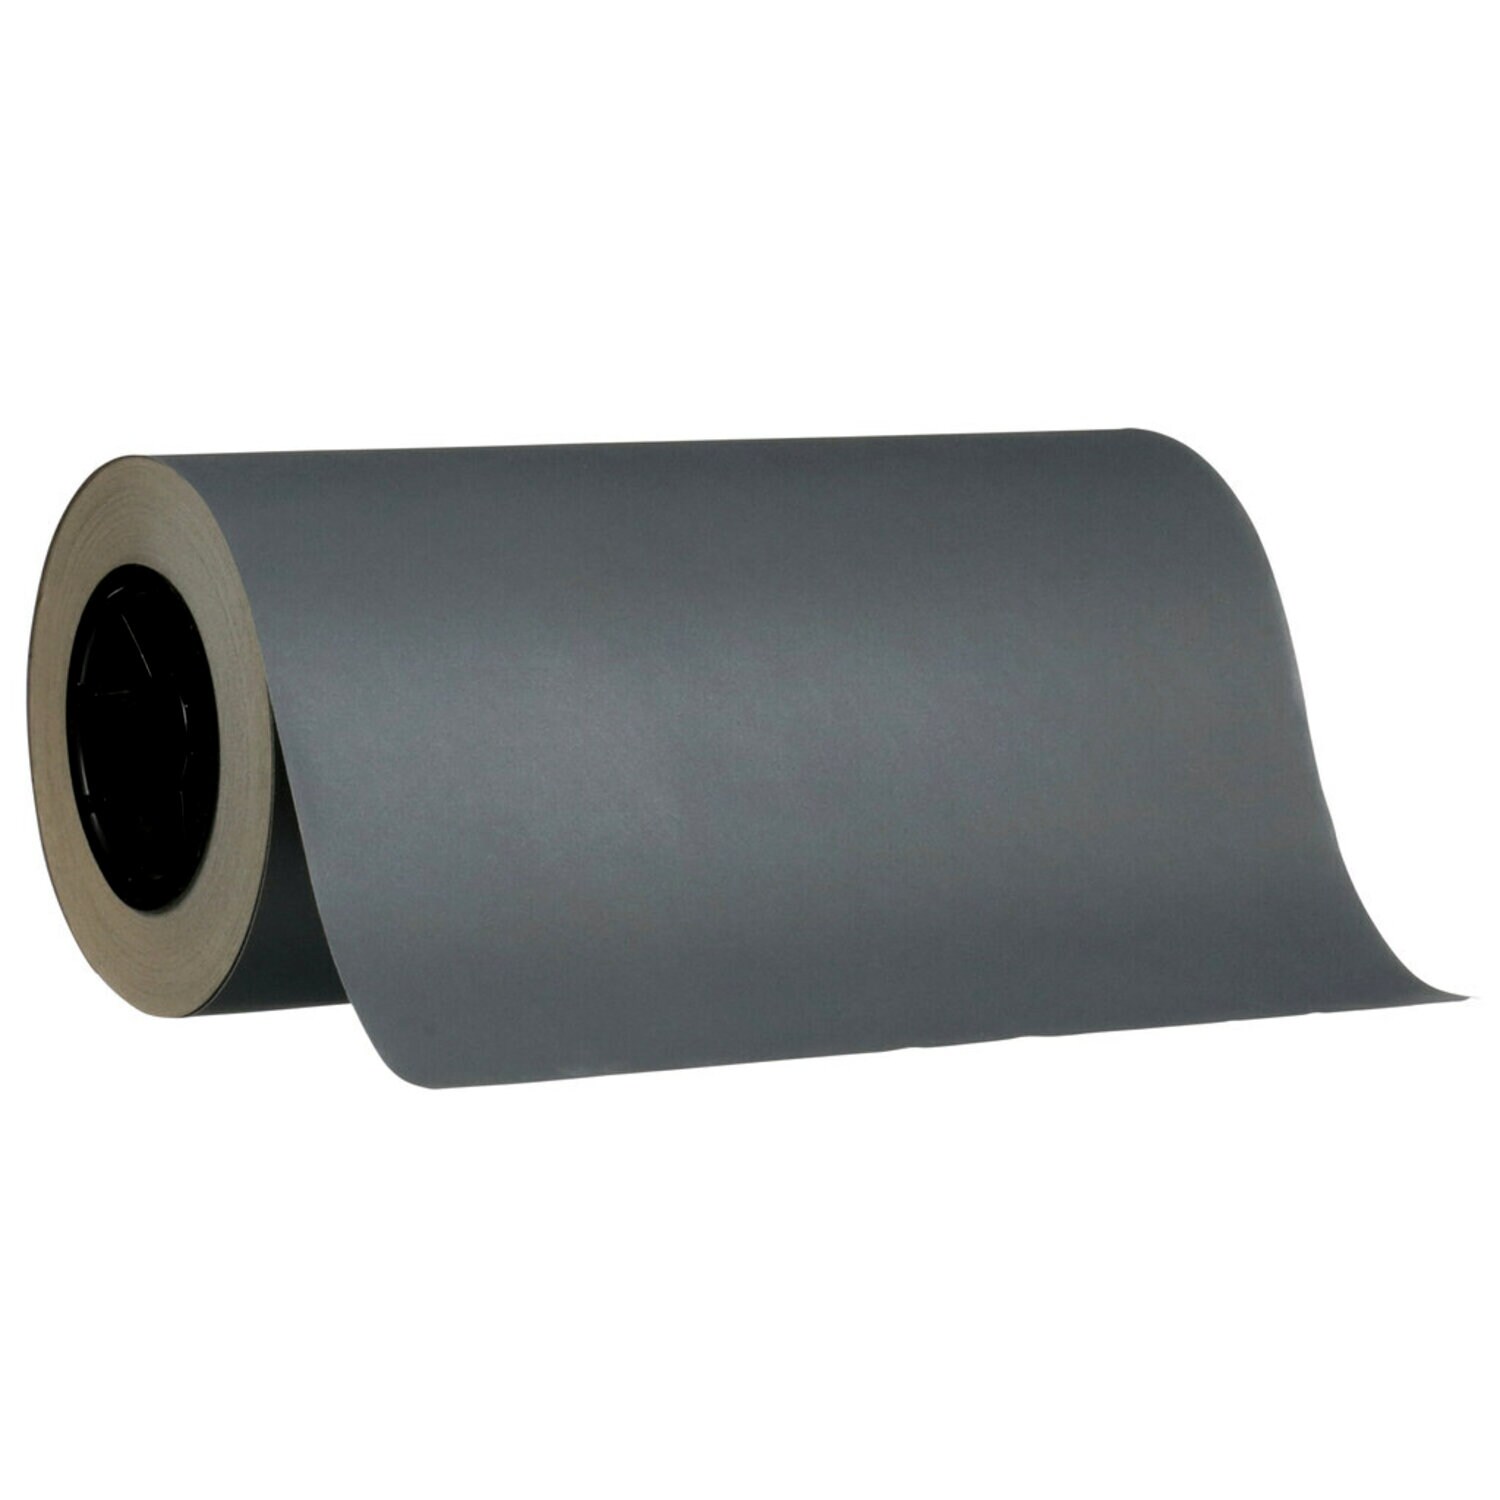 7010360460 - 3M Wetordry Paper Roll 413Q, 12 in x 50 yd, 320 A weight, 1 per inner
2 per case